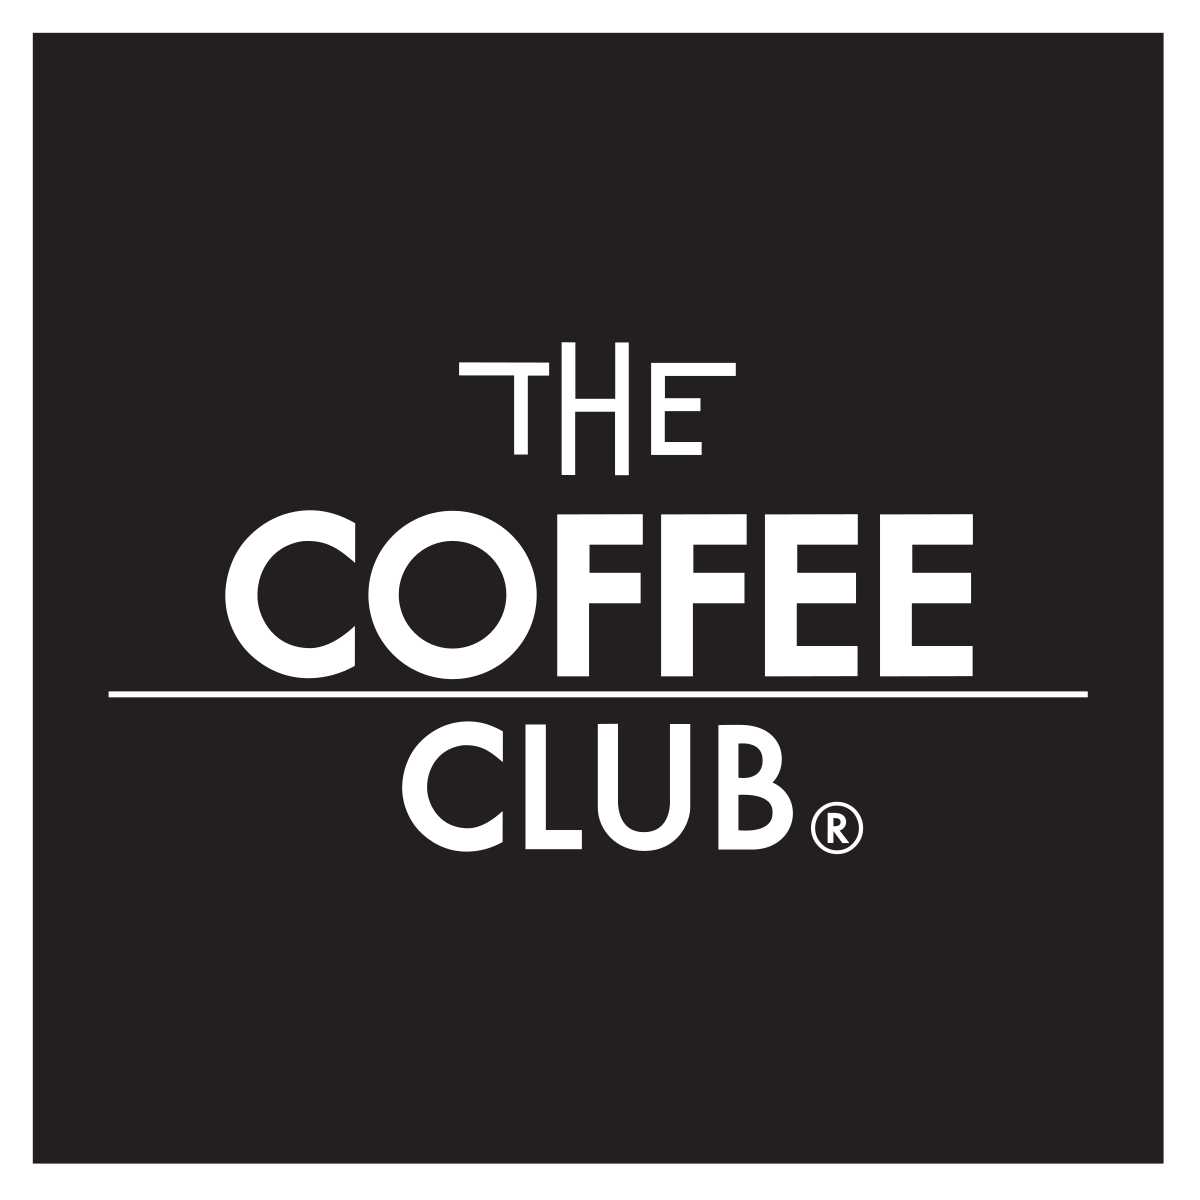 The Coffee Club Wikipedia - work at a coffee shop roblox wiki